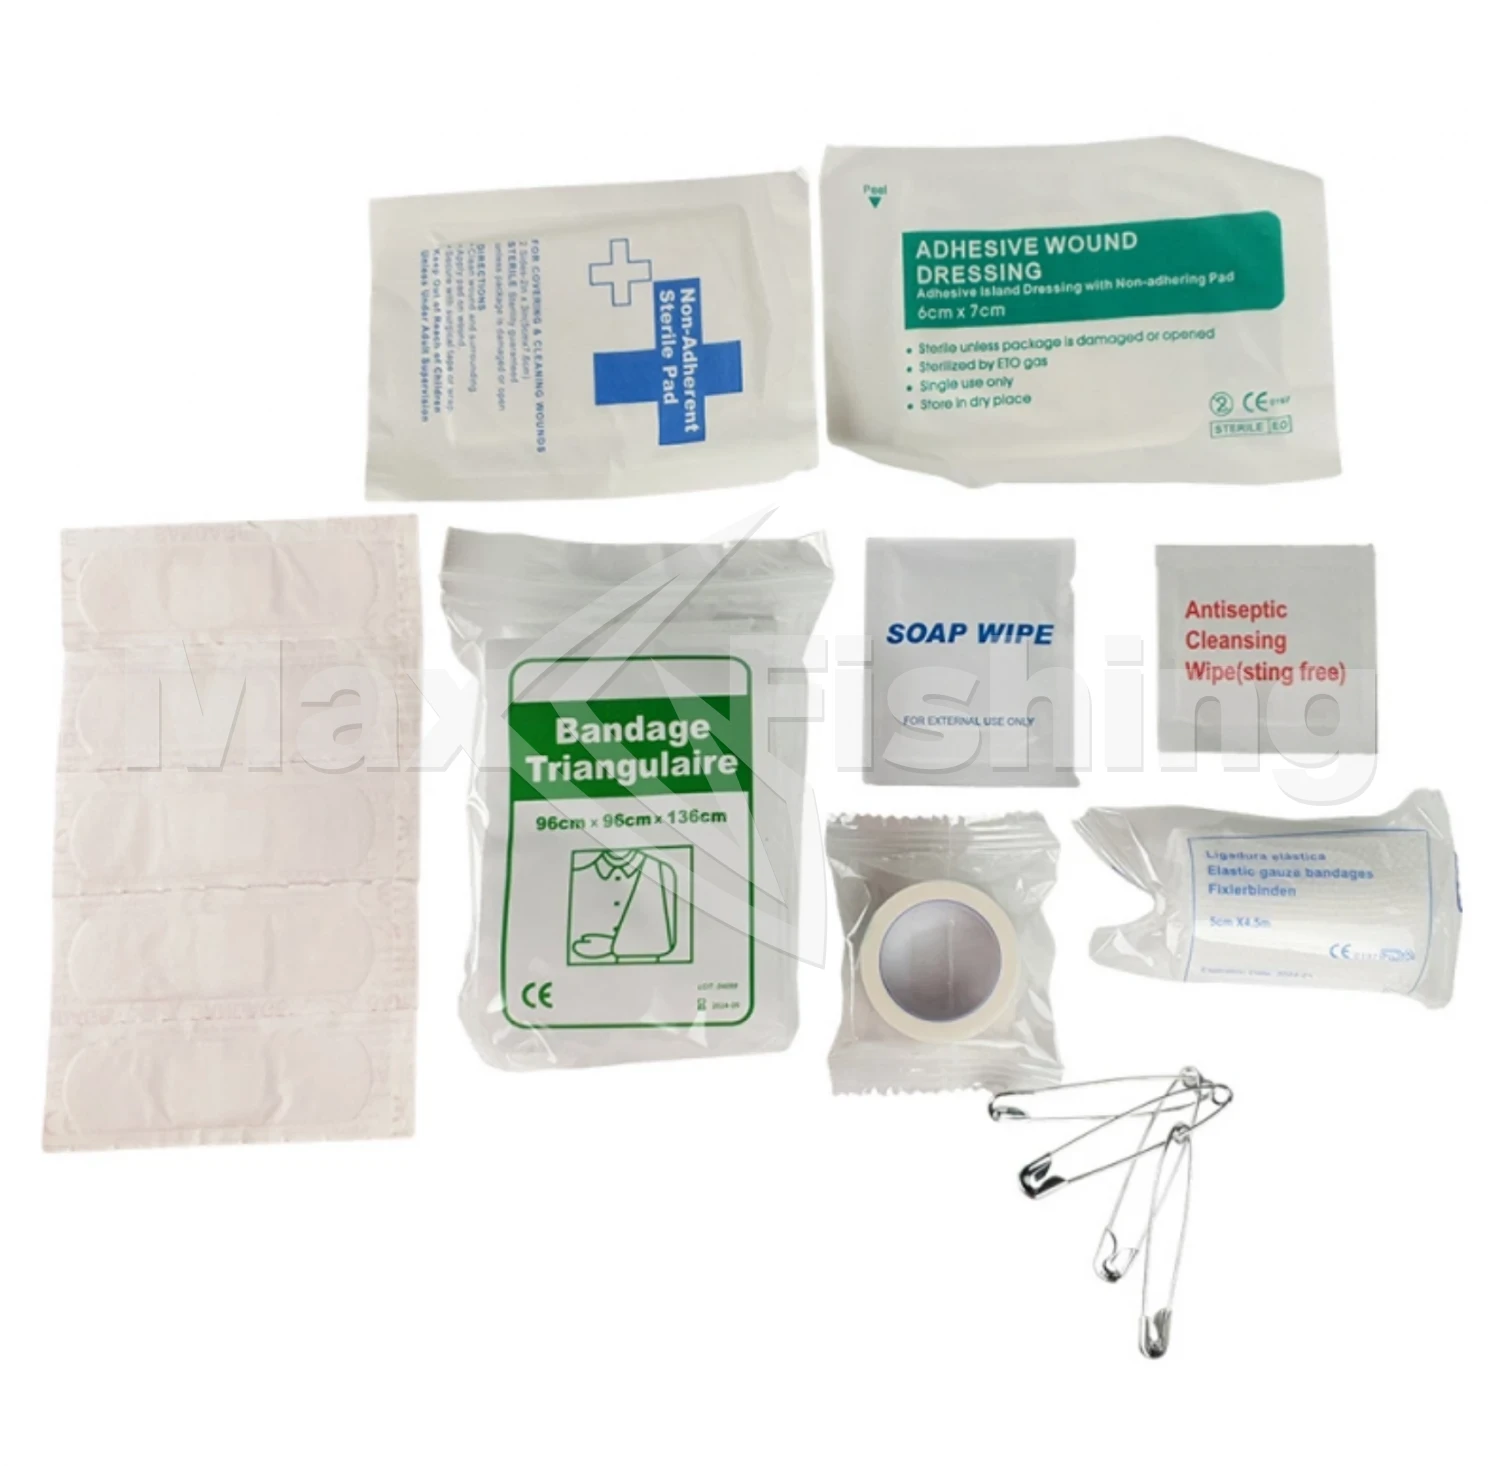 Аптечка первой помощи CWC First Aid Kit